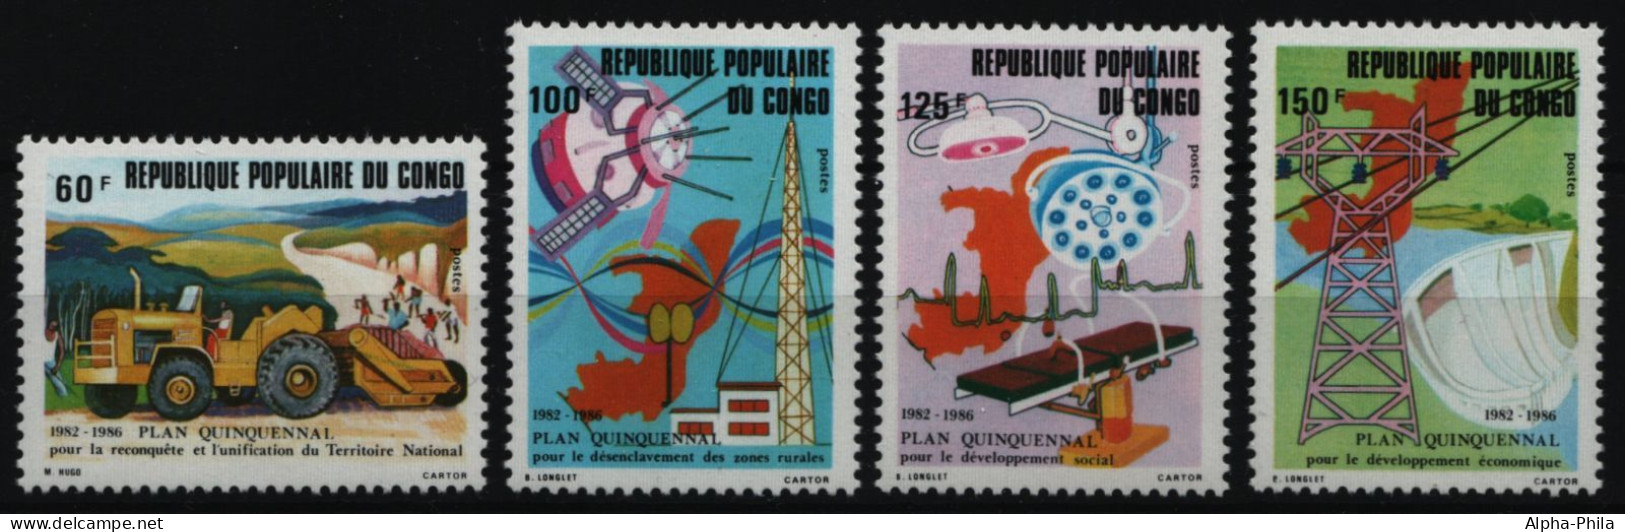 Kongo-Brazzaville 1982 - Mi-Nr. 870-873 ** - MNH - Fünfjahresplan - Ongebruikt